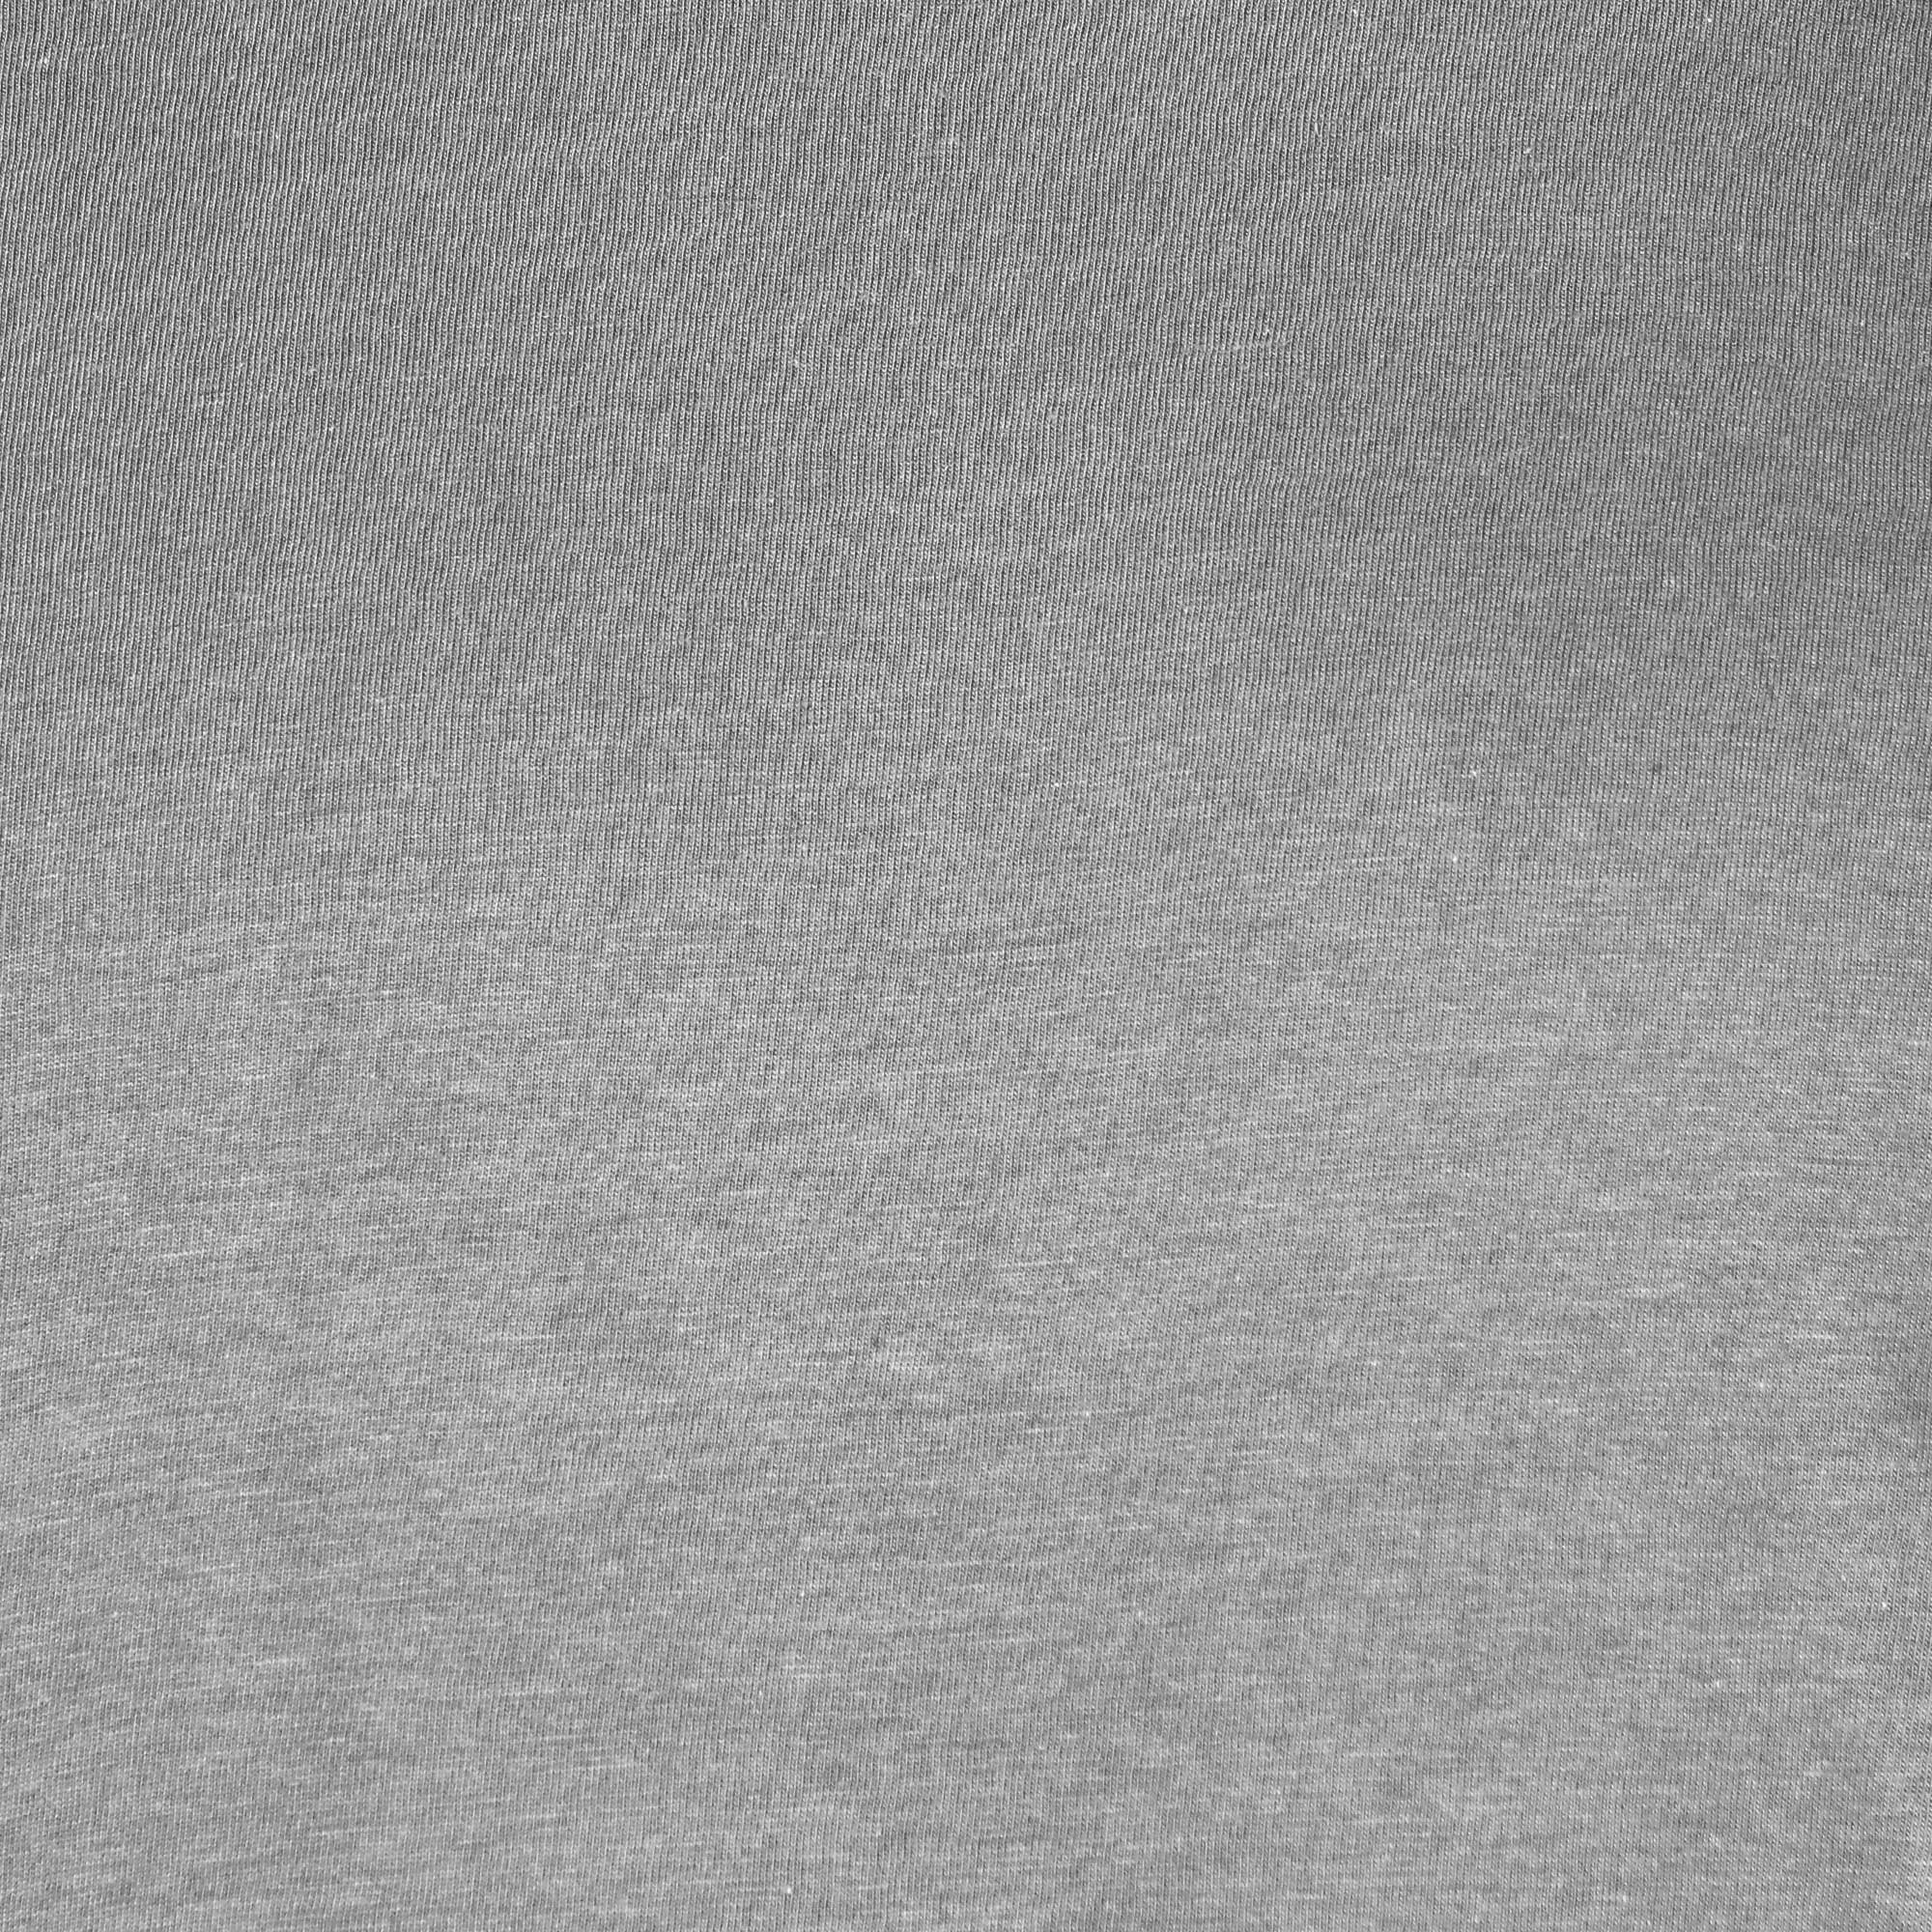 Мужская футболка Diva Teks серая (DTD-04), цвет серый, размер 40-52 - фото 5